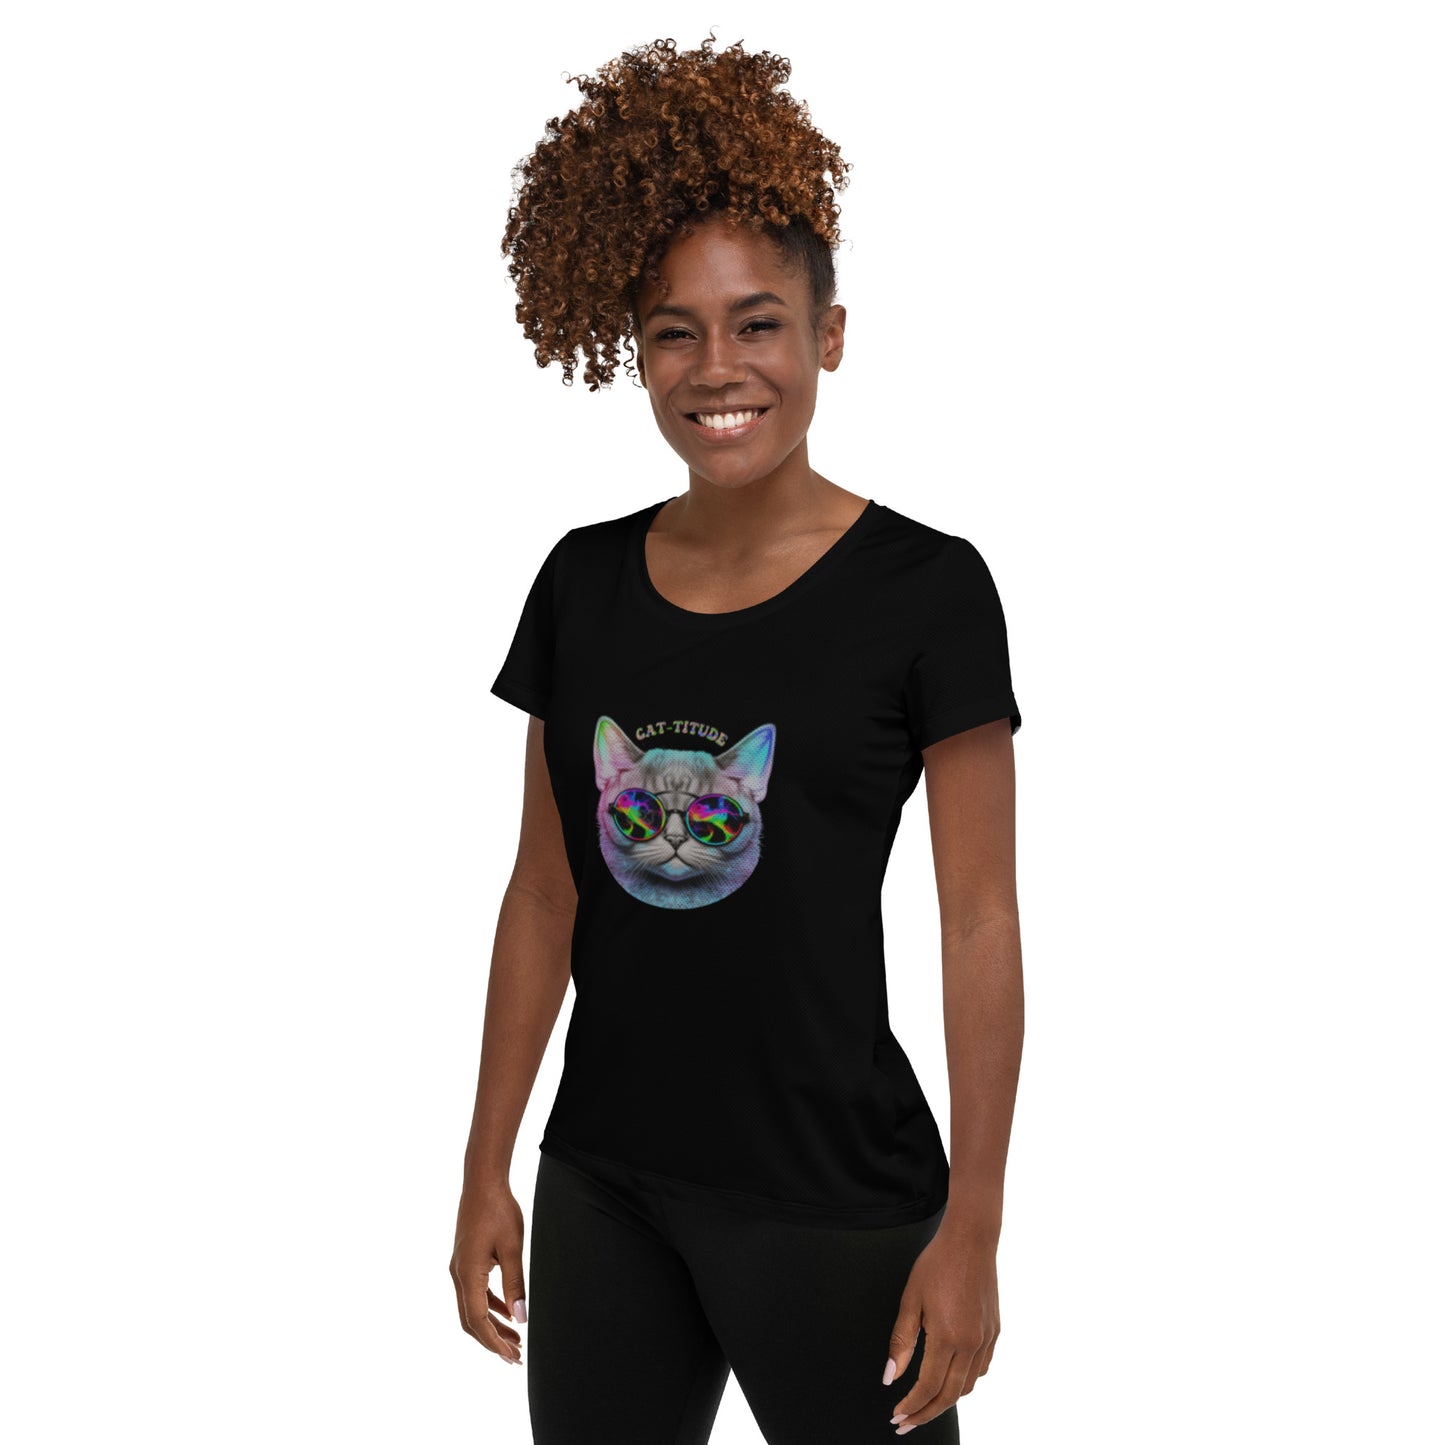 "Cat-Titude" Women's Athletic T-Shirt